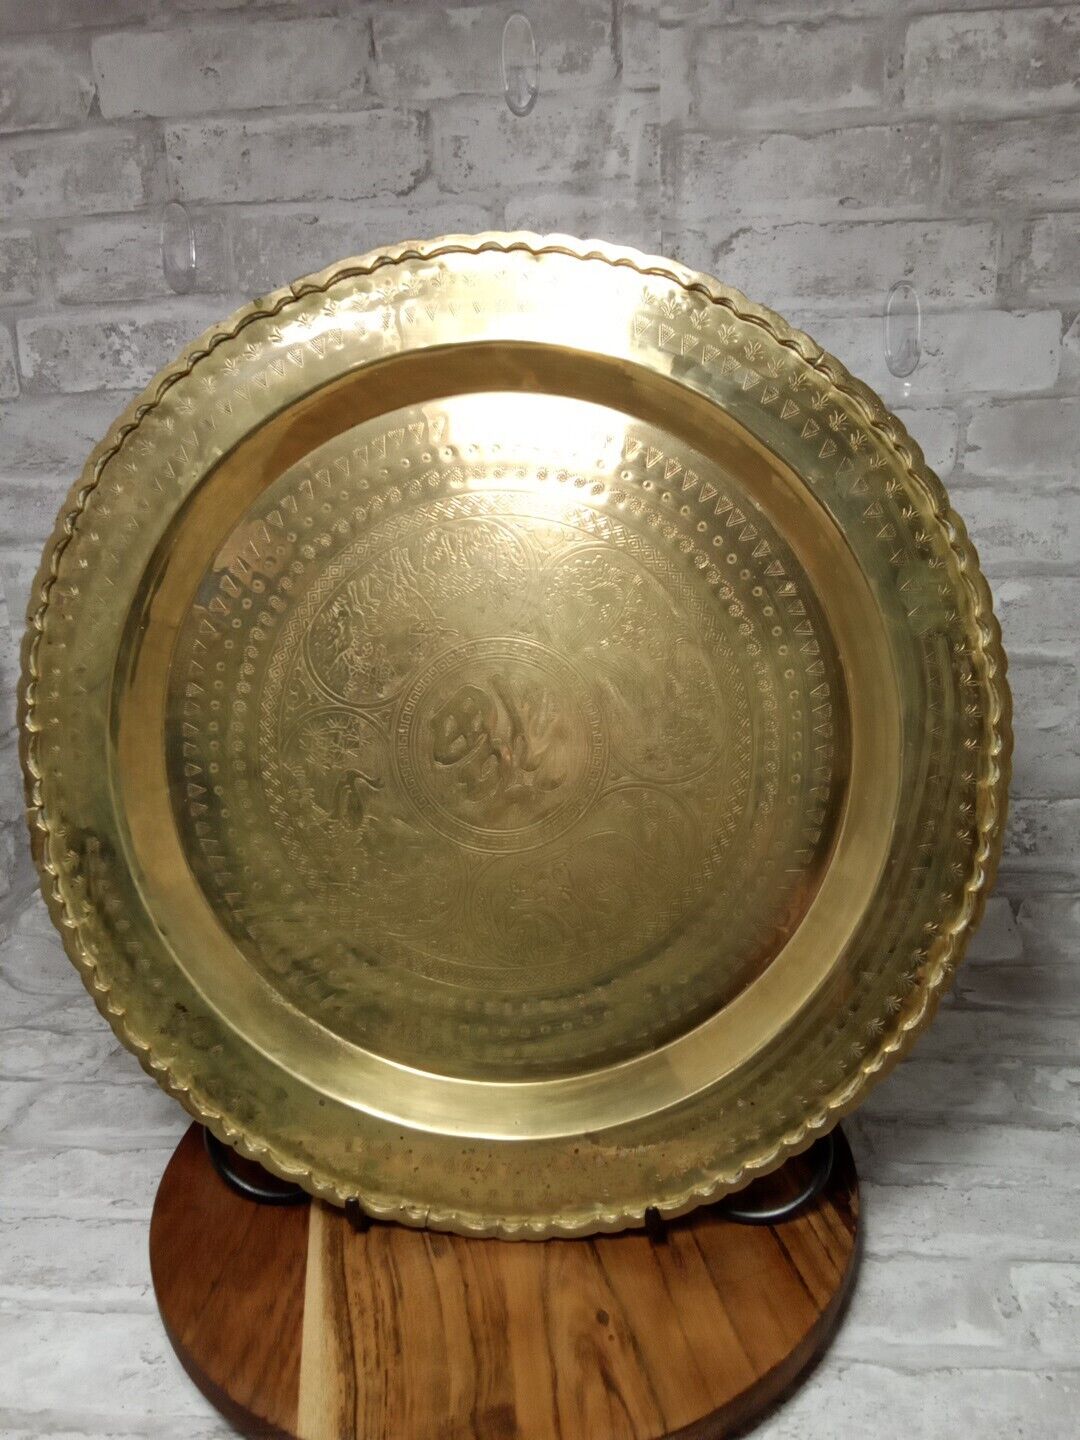 Large vintage etched brass tray Chinese engraved boho decor gold tone 17.5